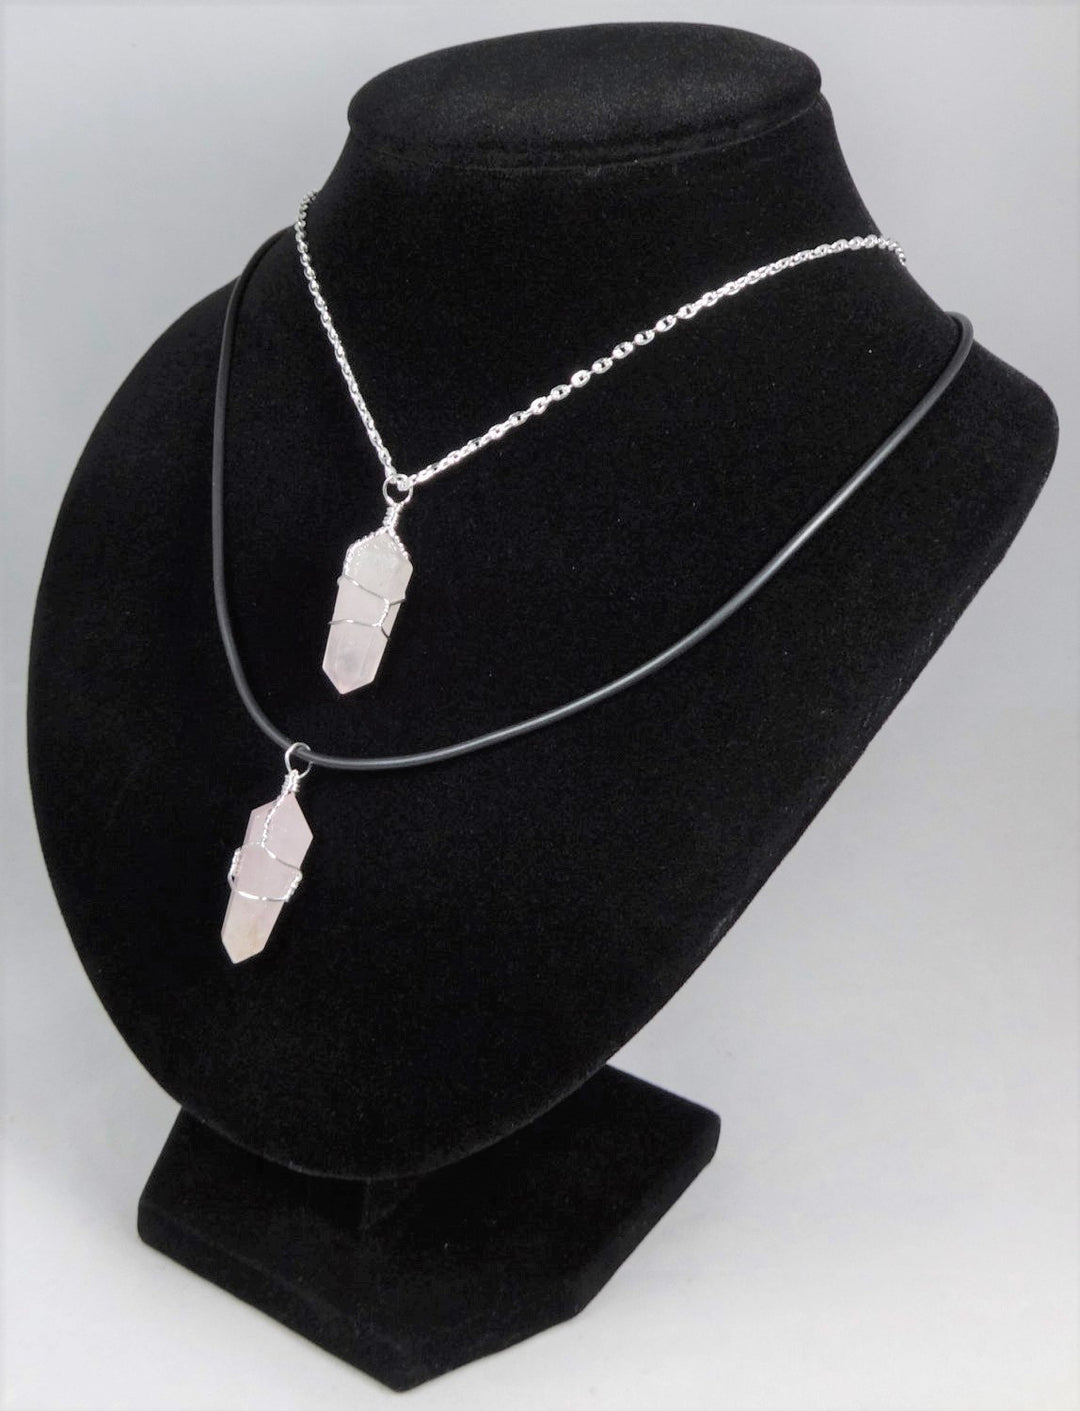 Bulk Wholesale Lot Of 5 Pieces - Rose Quartz Point Pendant Silver Wire Wrapped - Pendant Charm Bead Necklace Supply